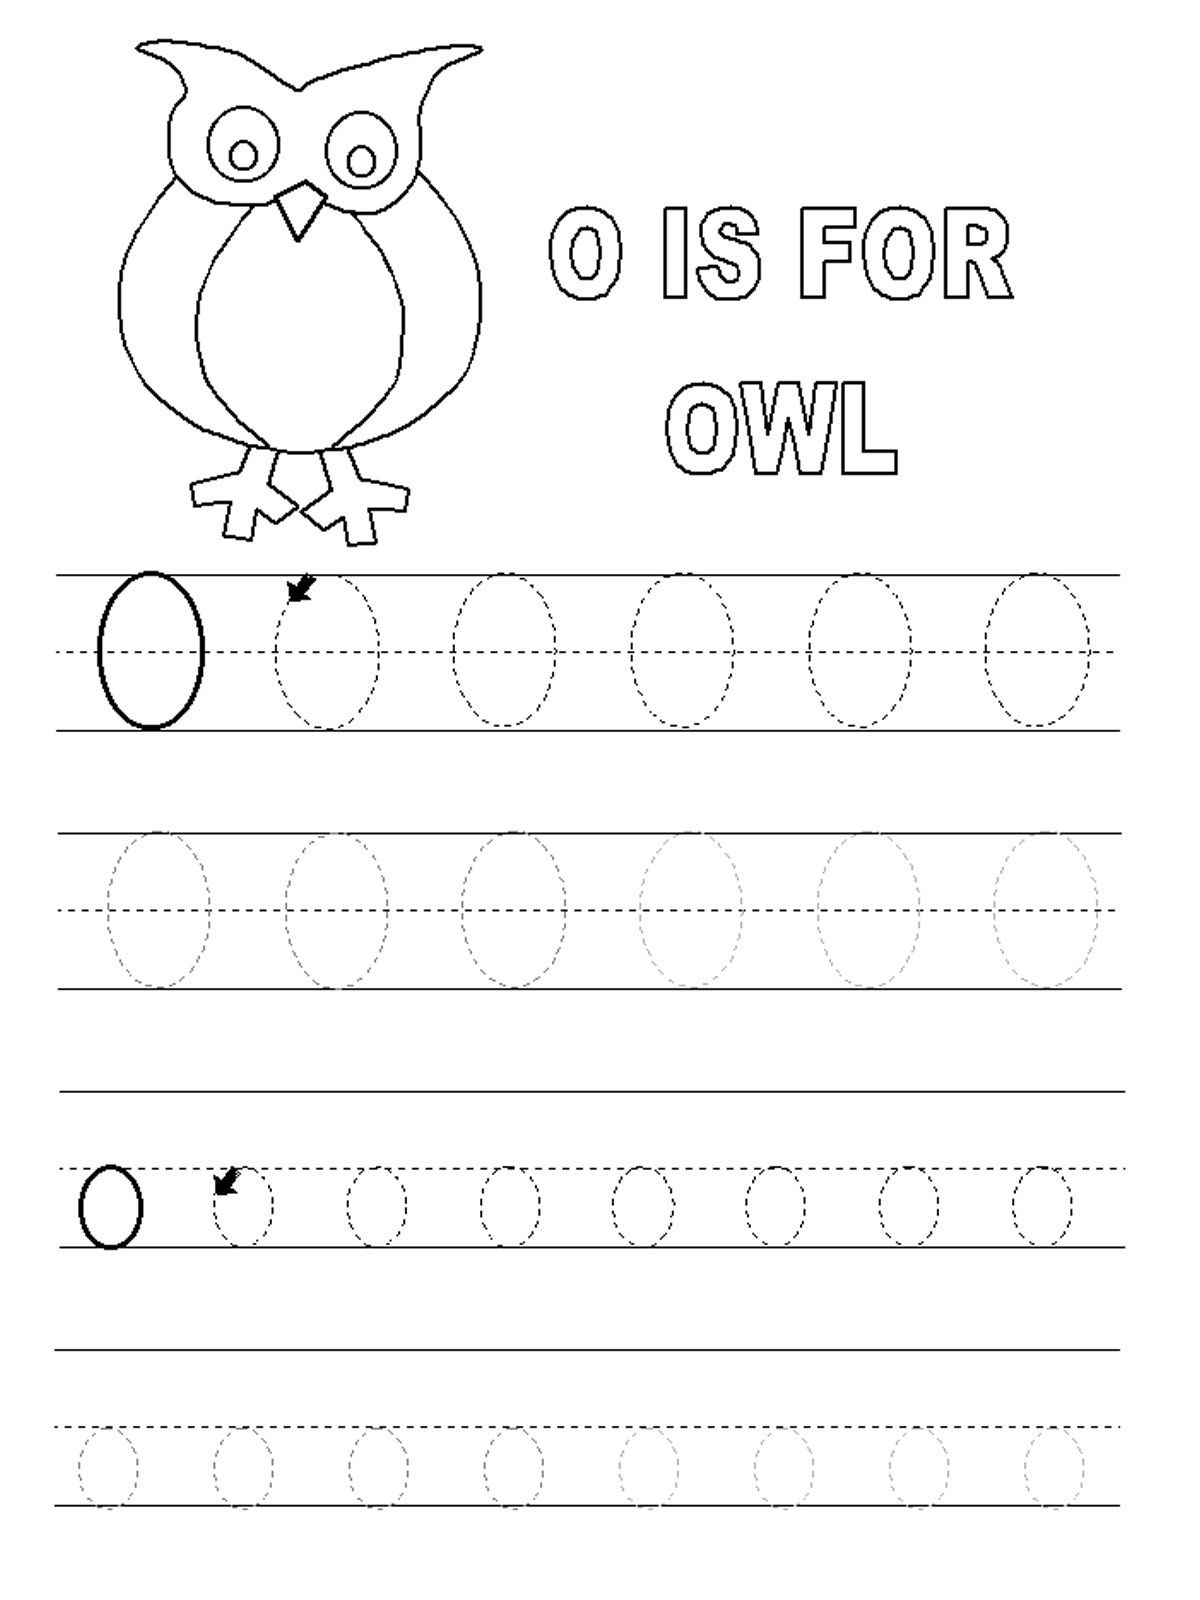 Letter O Worksheets For Preschool | Letter O Worksheets inside Letter O Worksheets For Toddlers